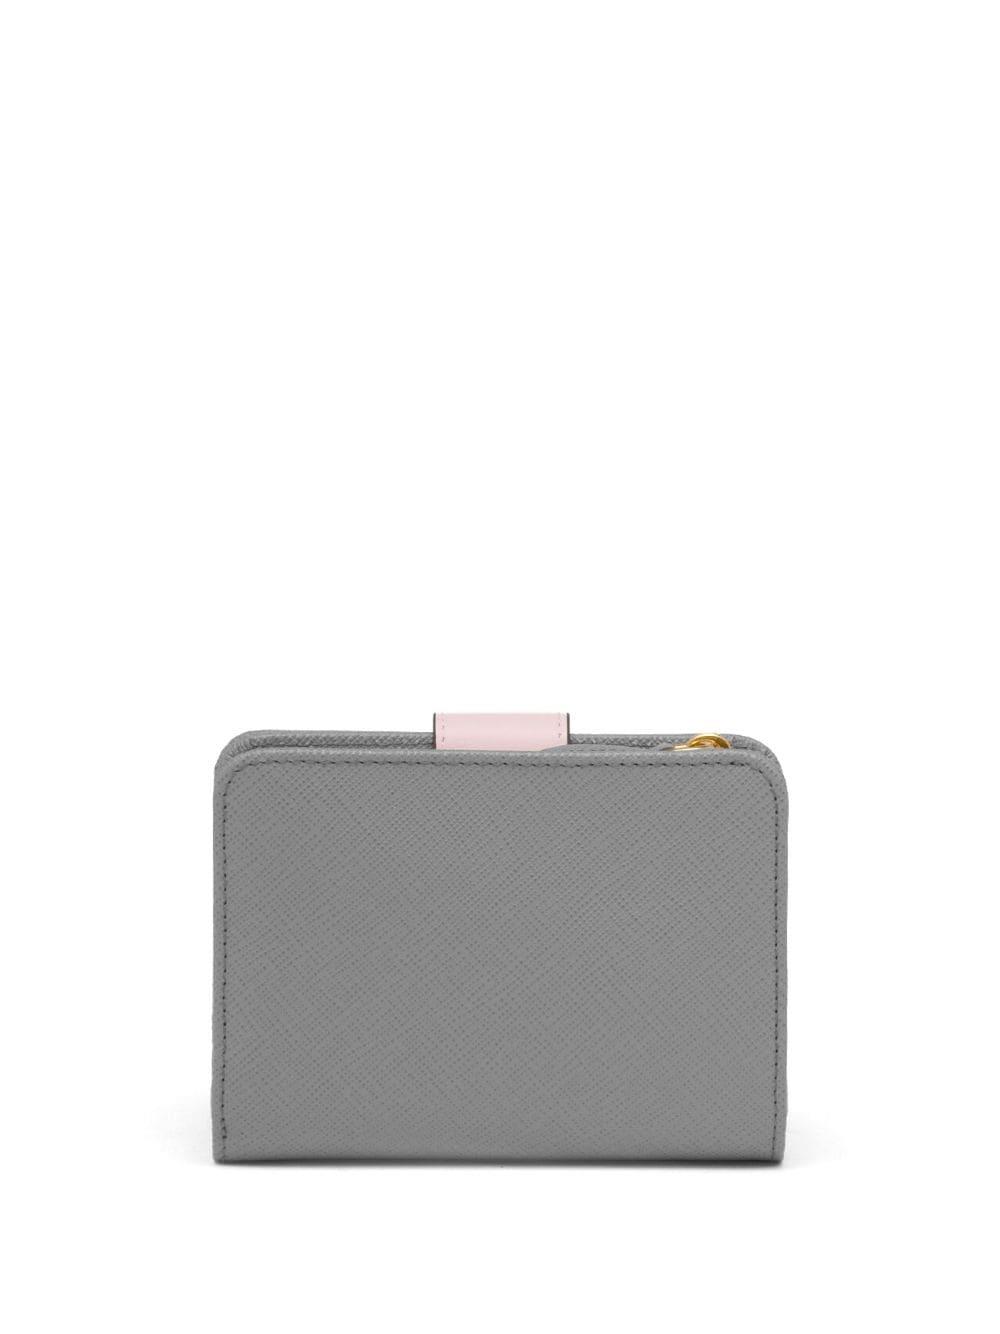 Prada small Saffiano leather wallet - Grey